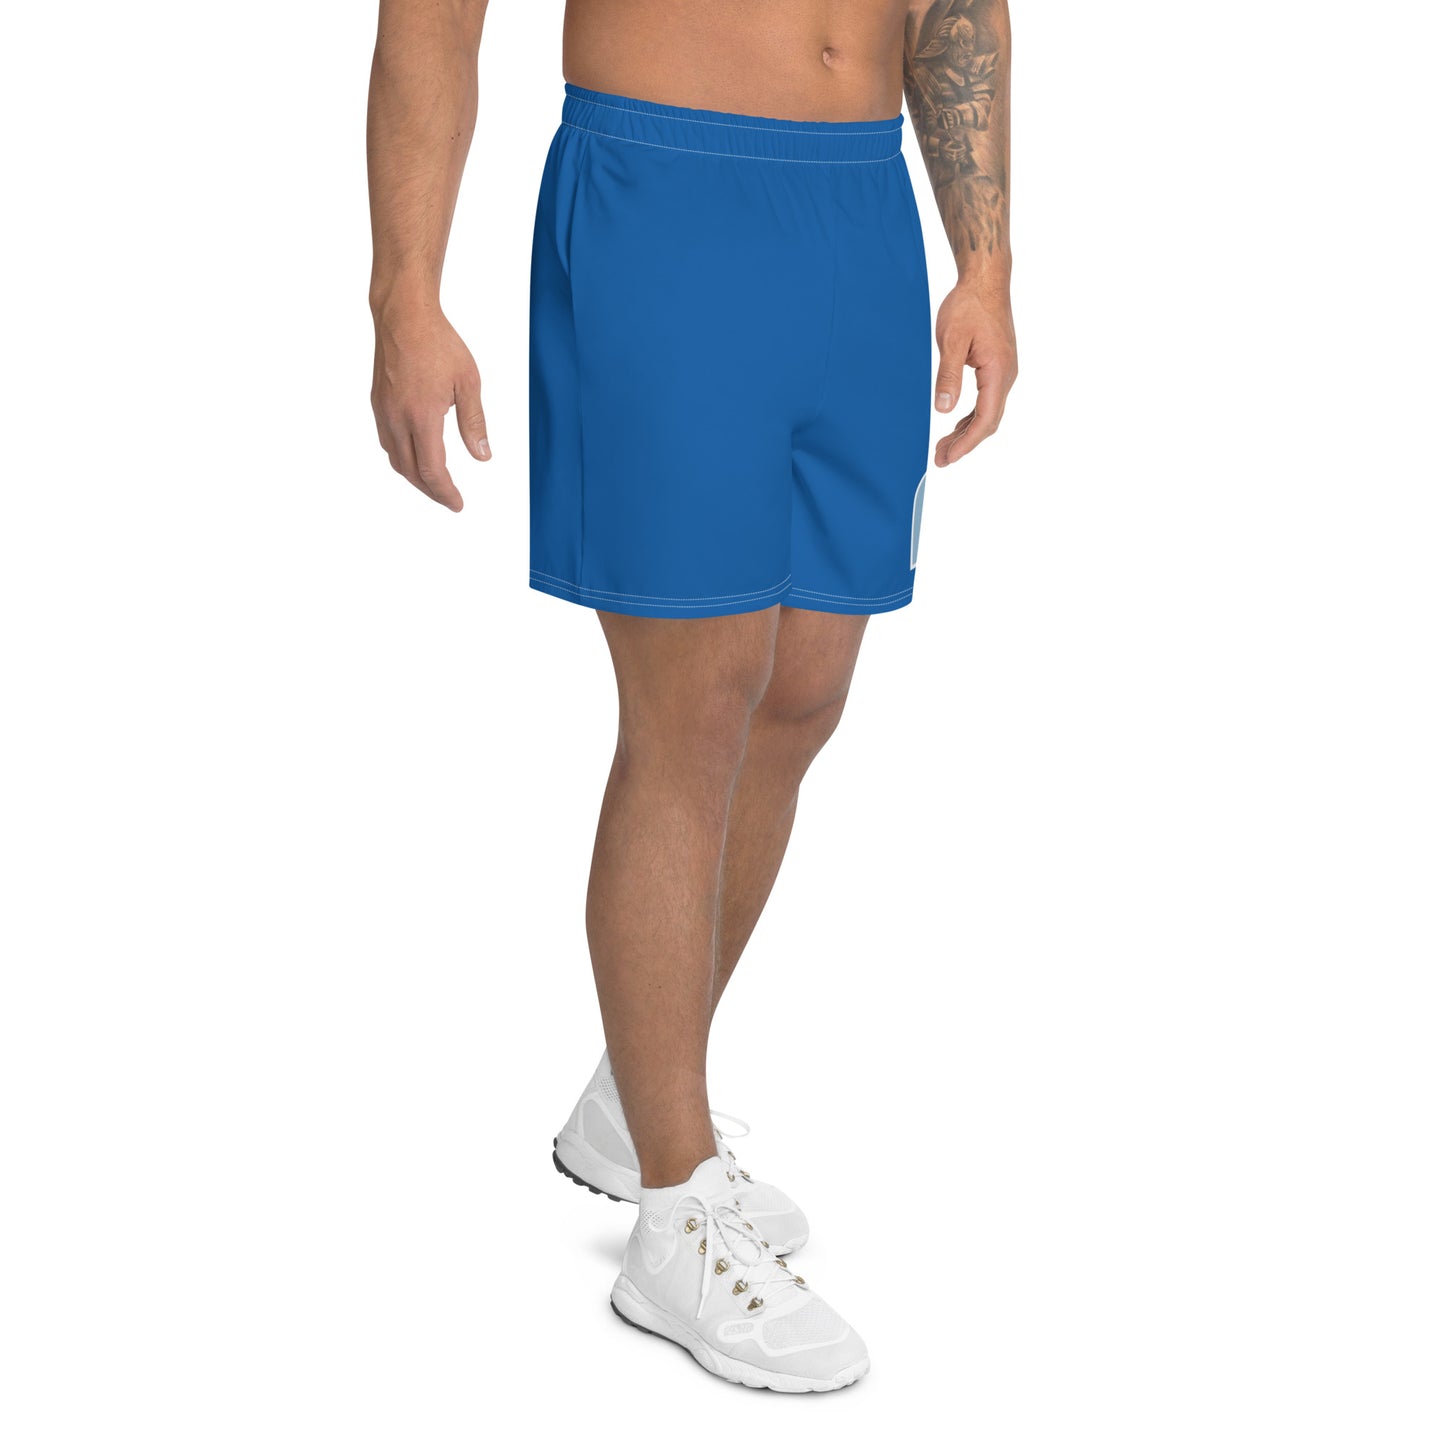 Tampa Phenoms Men's Athletic Shorts